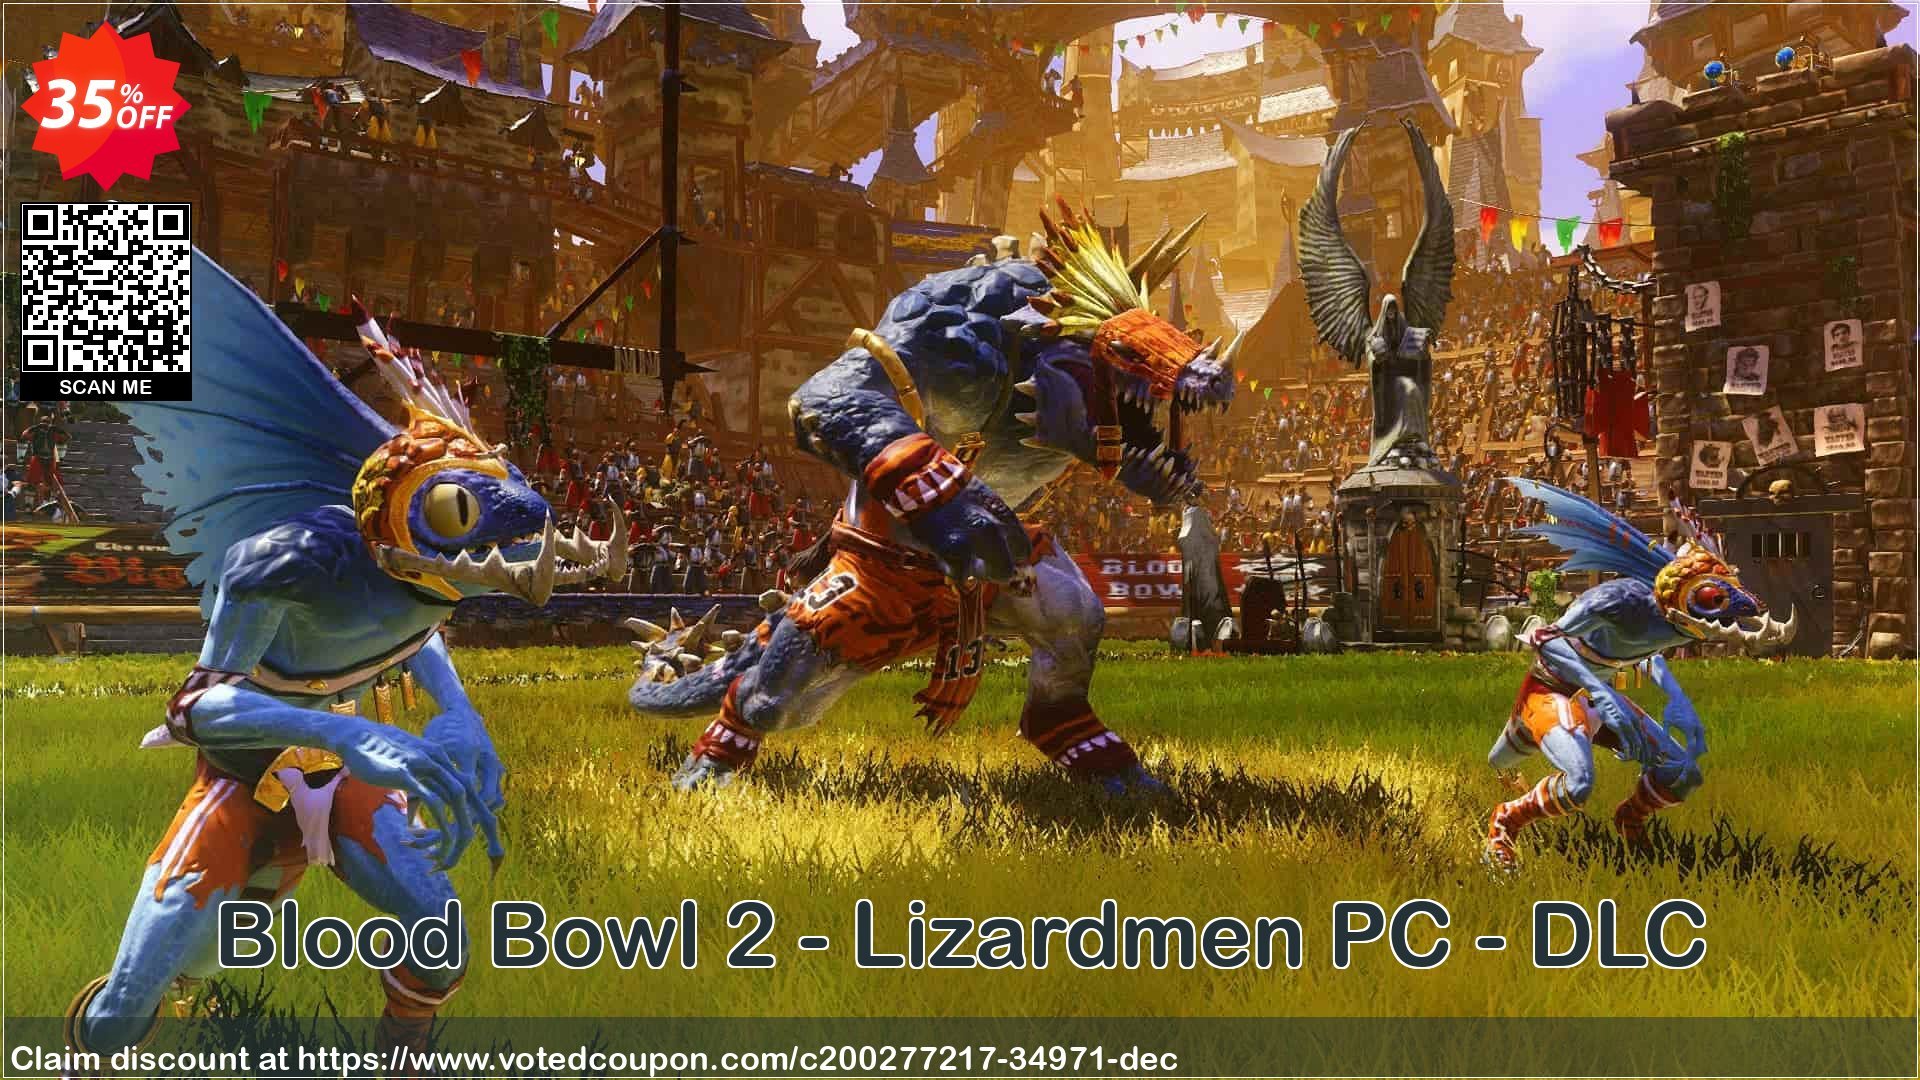 Blood Bowl 2 - Lizardmen PC - DLC Coupon Code Apr 2024, 35% OFF - VotedCoupon